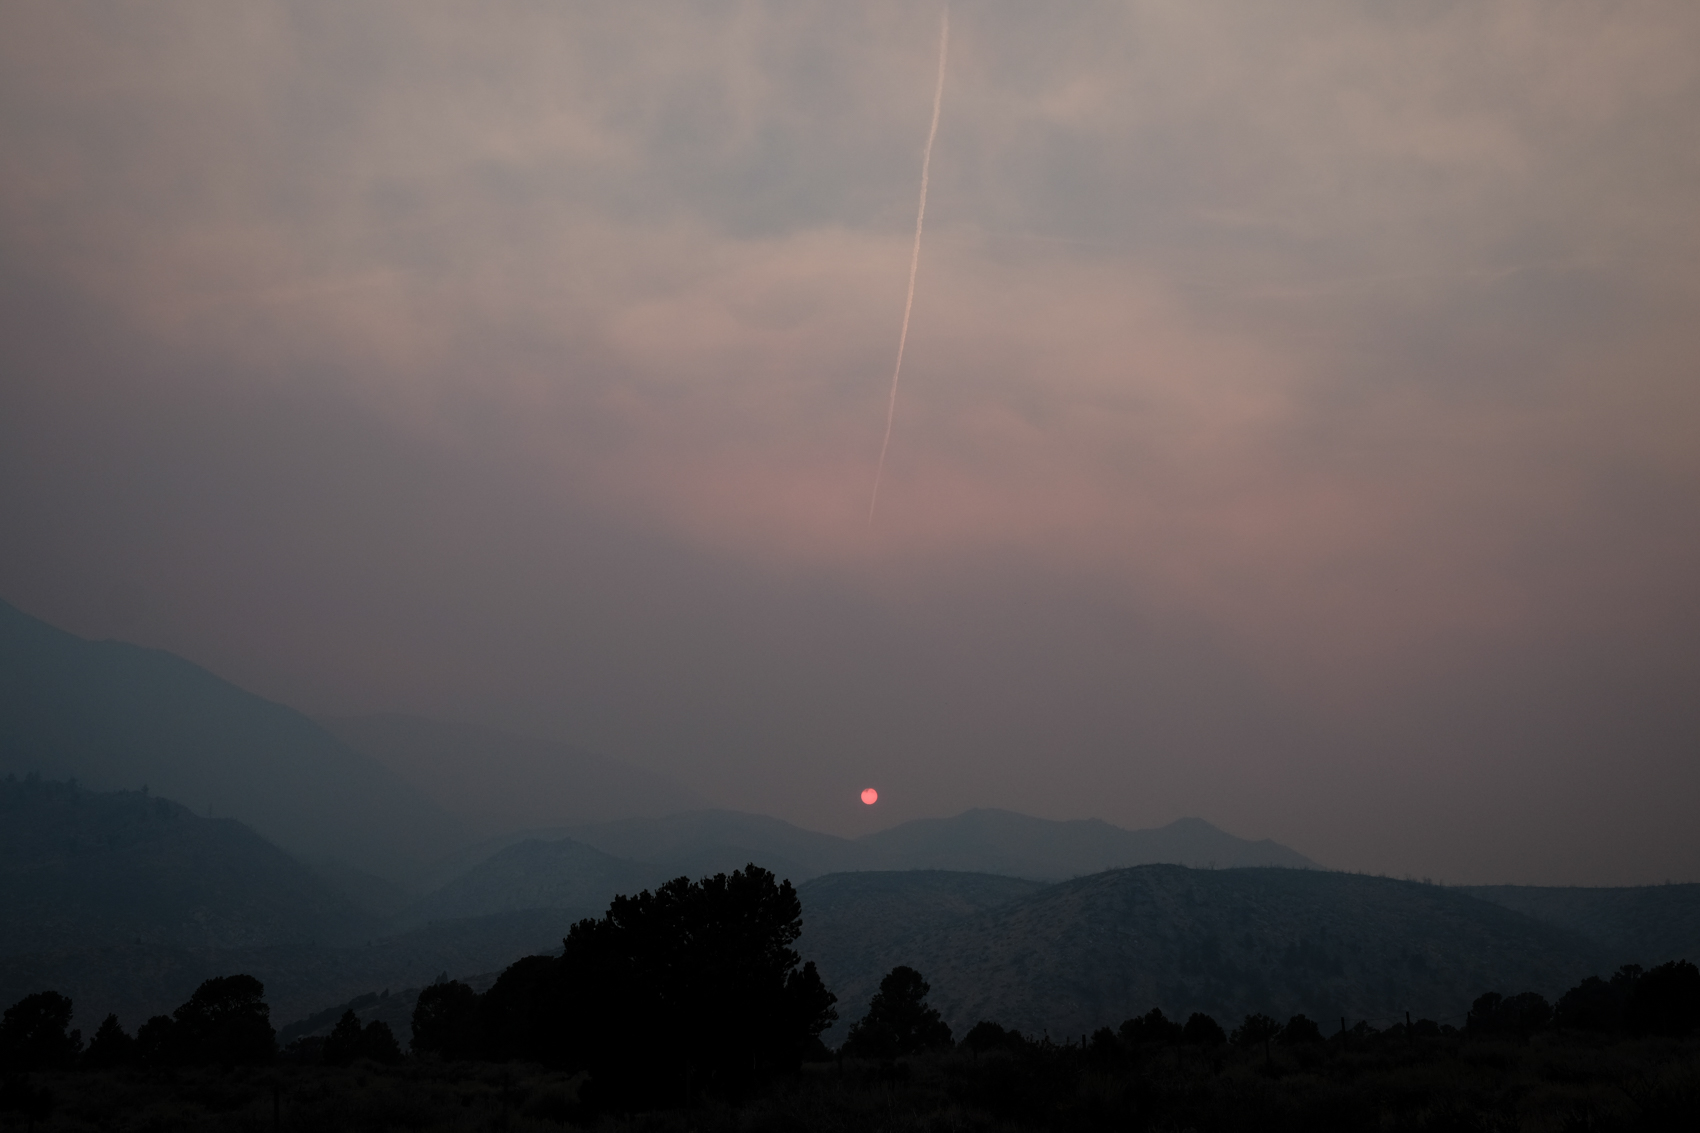  Sunset and wildfire smoke. California. August 2015. 